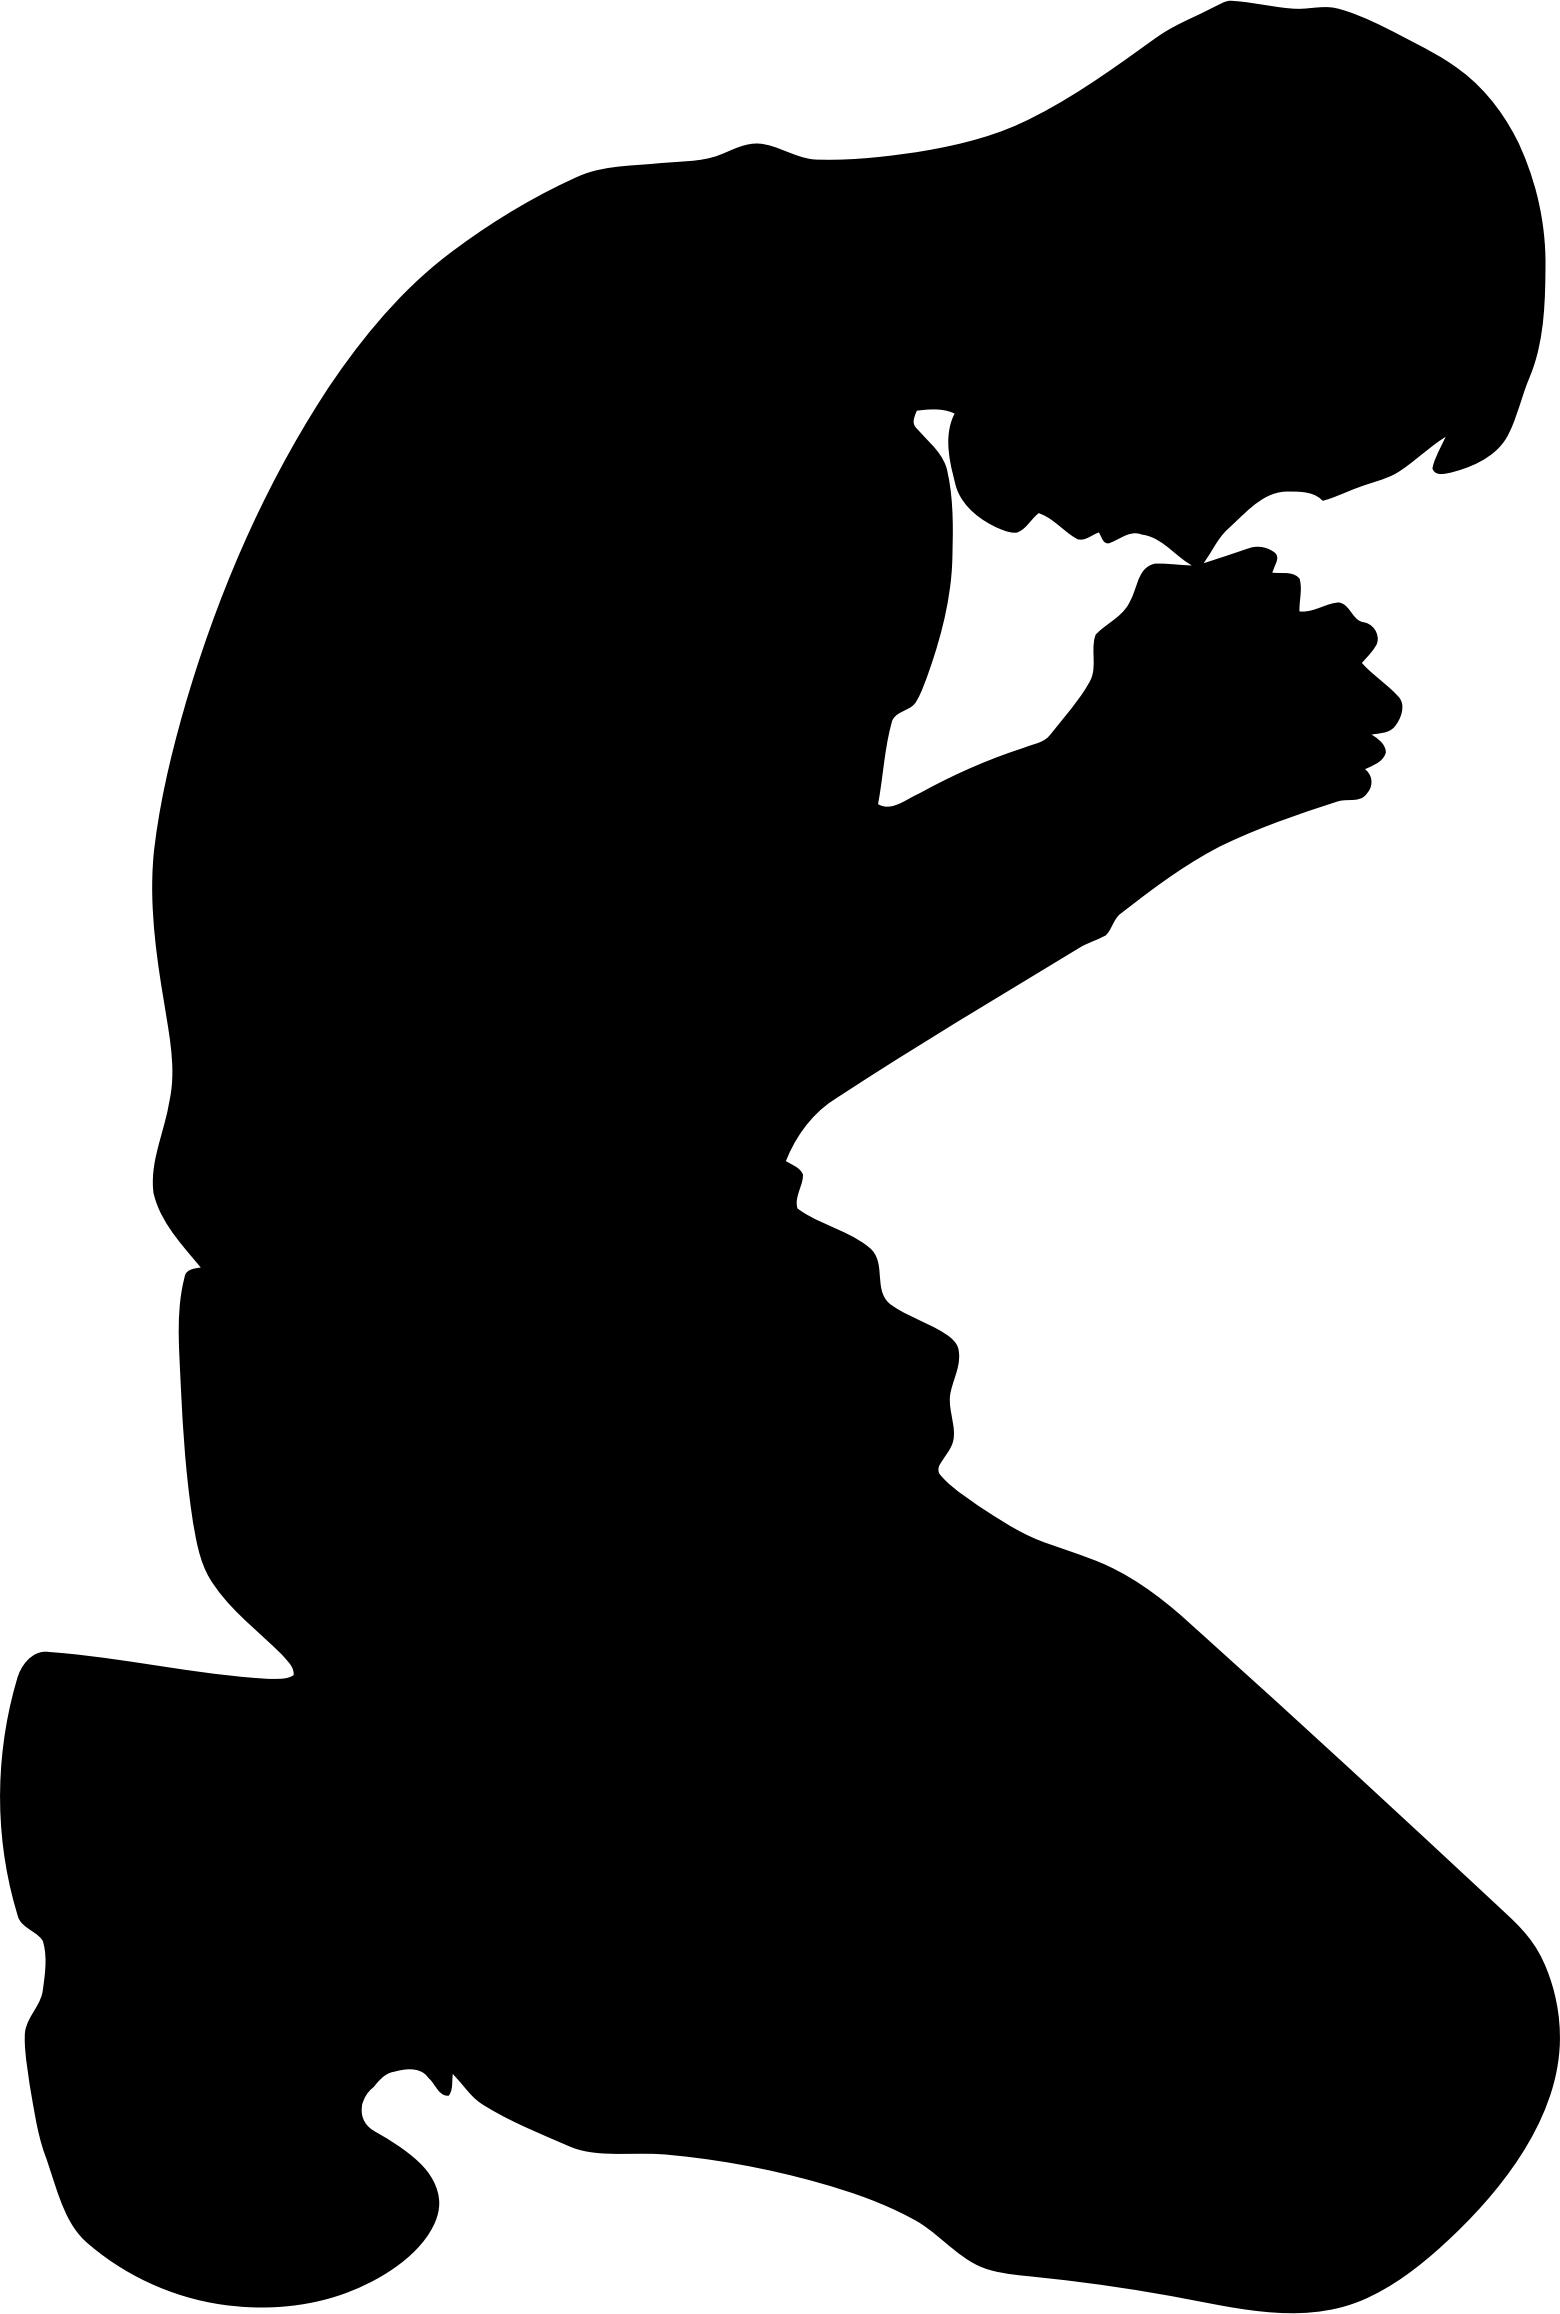 Man Kneeling In Prayer Minus Ground Silhouette png